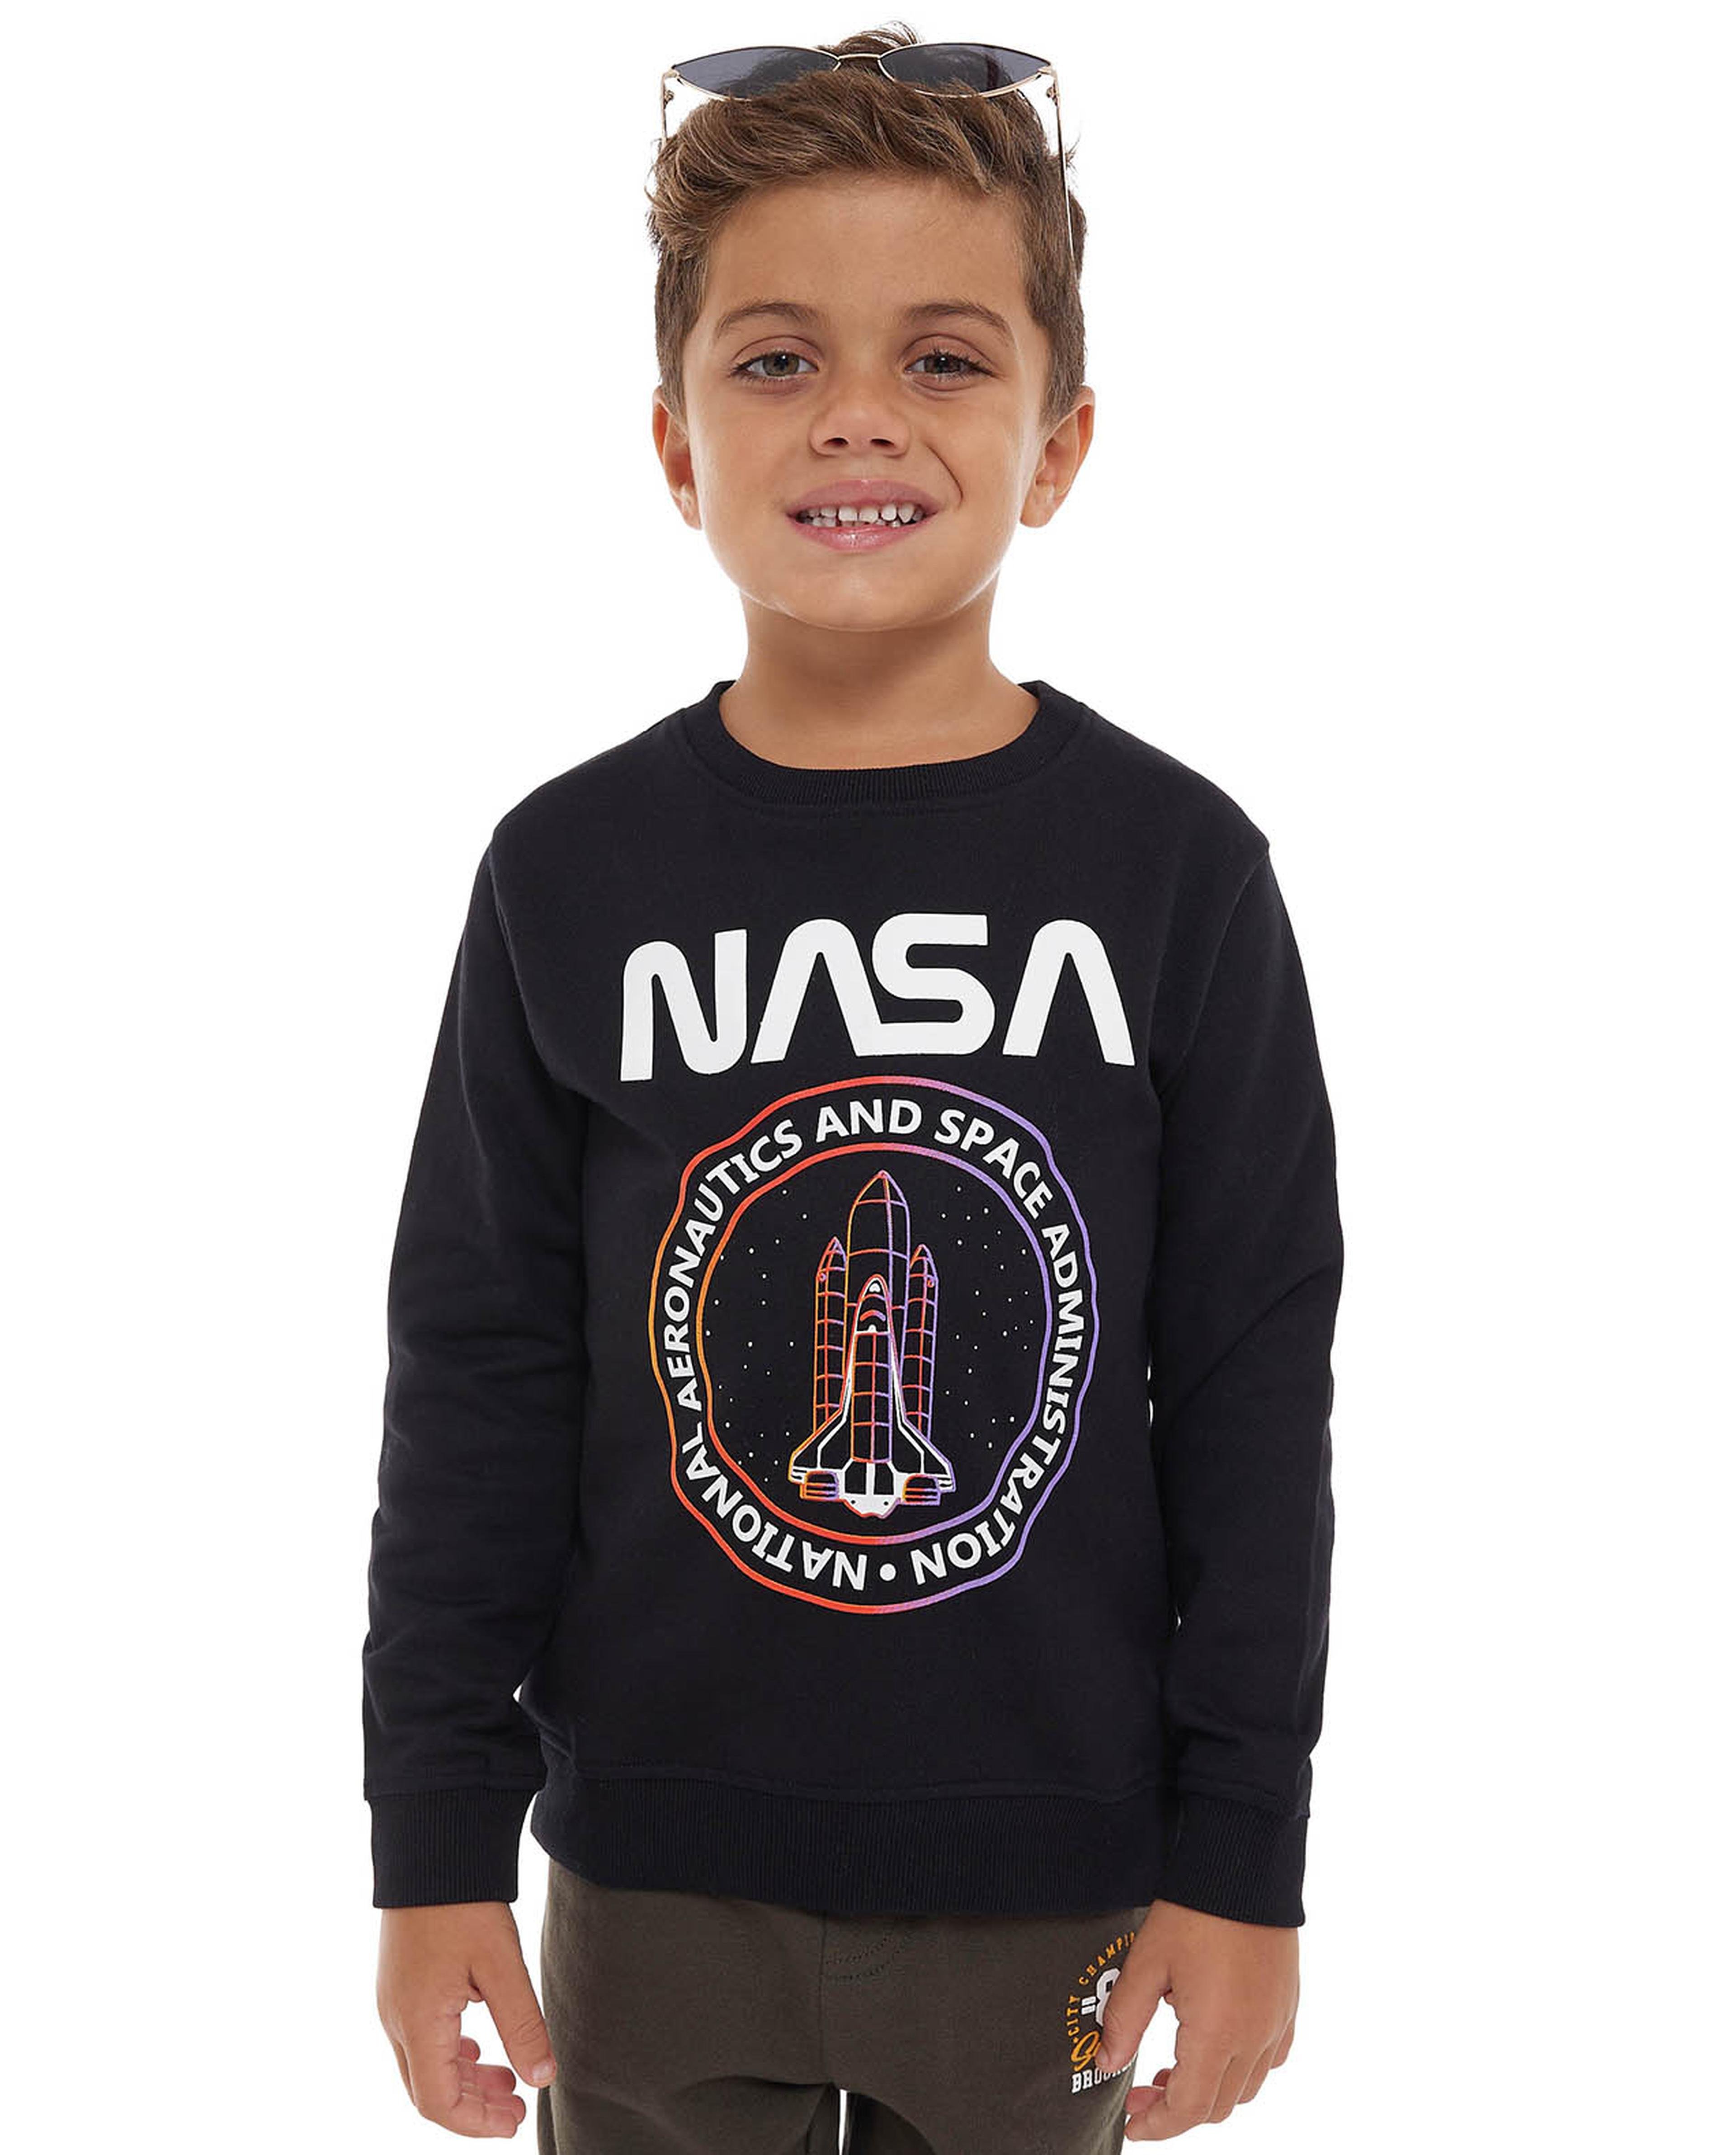 NASA Print Sweatshirt with Crew Neck and Long Sleeves